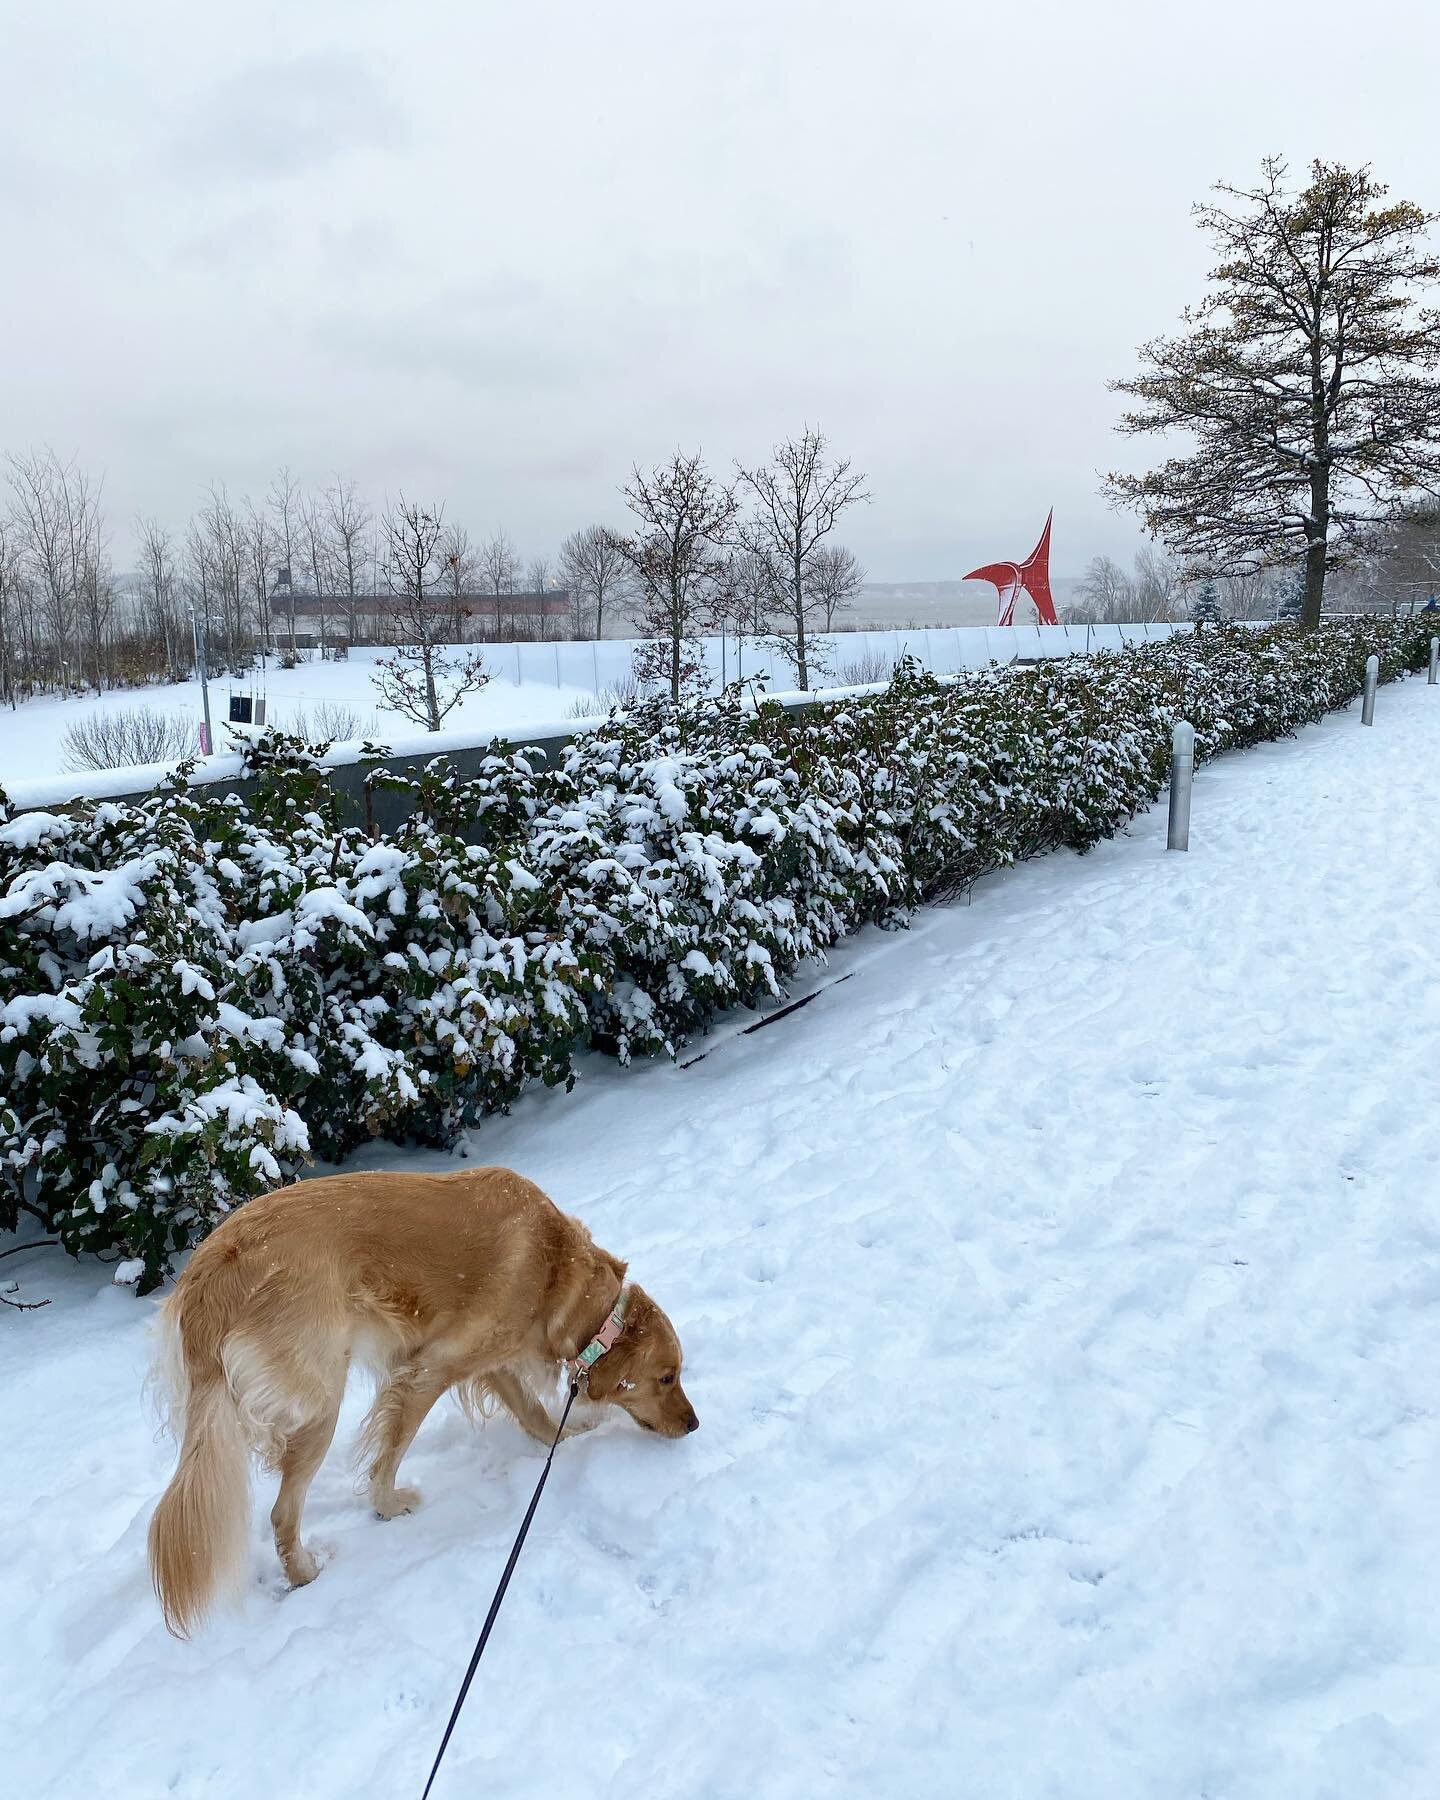 Winnie&rsquo;s first snow 

&bull;
&bull;

#dog #dogsofinstagram #seattle #downtownseattle #olympicsculpturepark #snow #snowstorms #2021